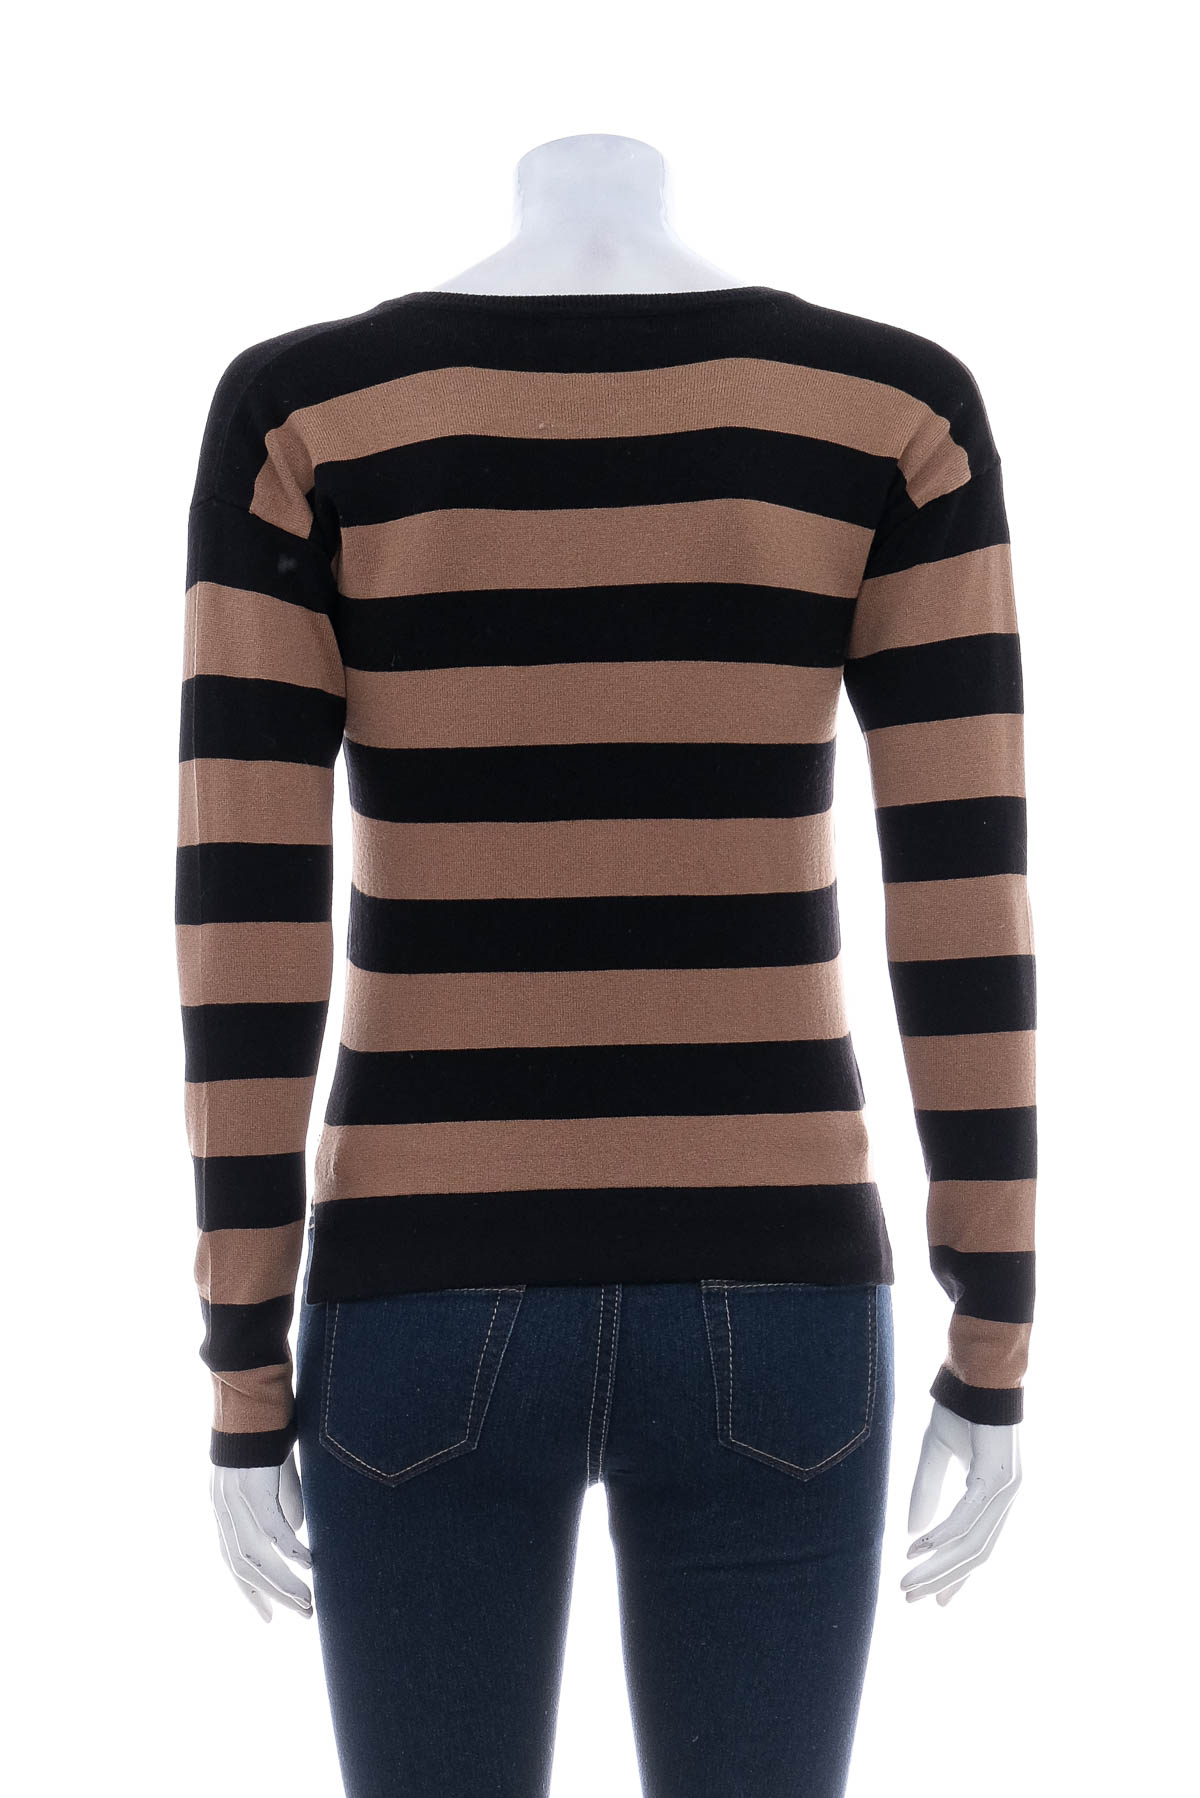 Women's sweater - MANGO BASICS - 1